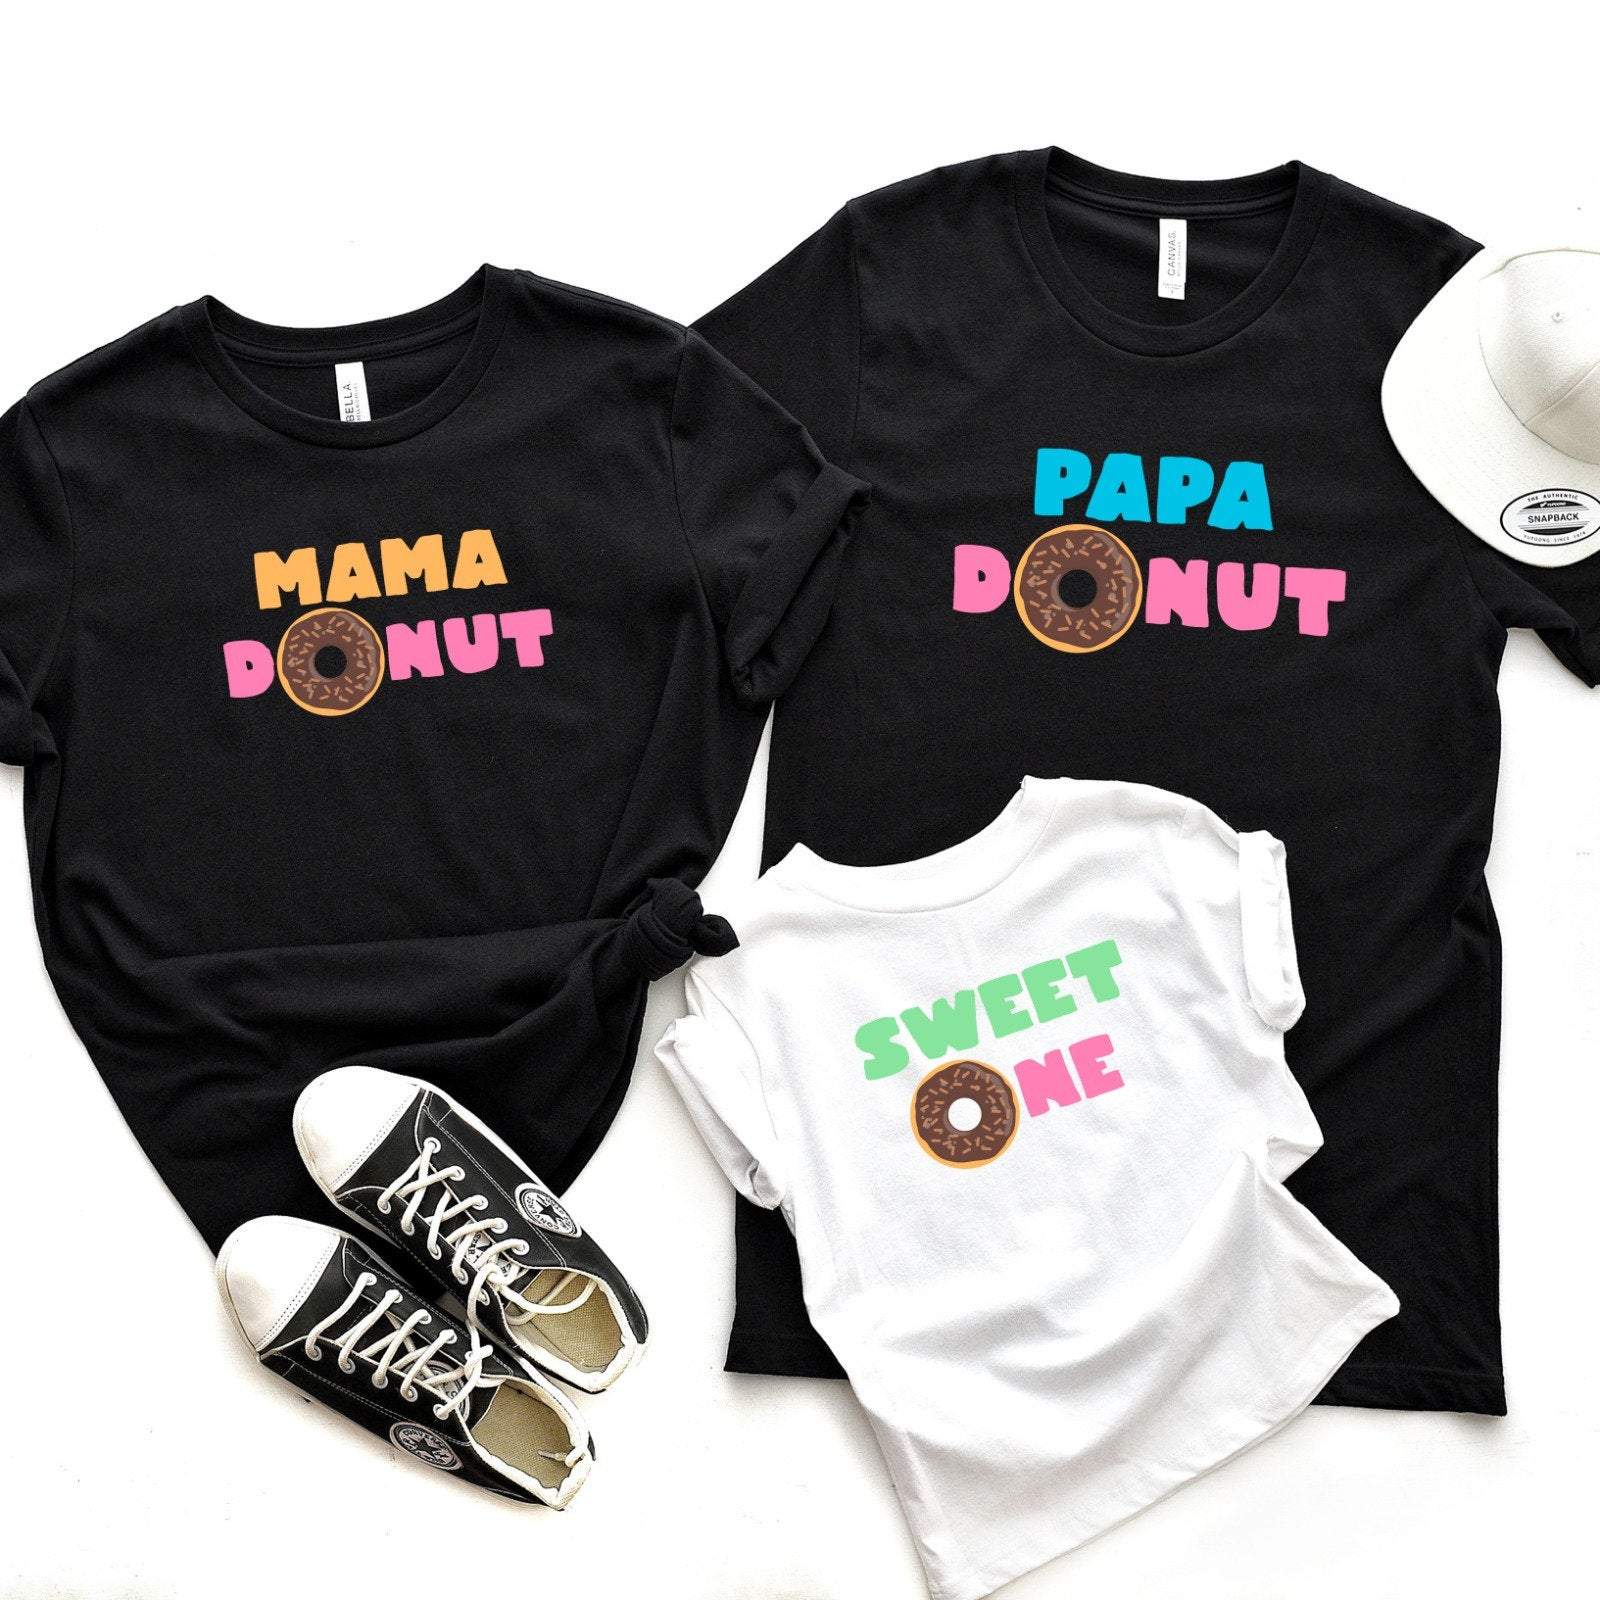 Family donut kids birthday party t-shirts, Matching donut themed shirts, Dad, mum, birthday girl